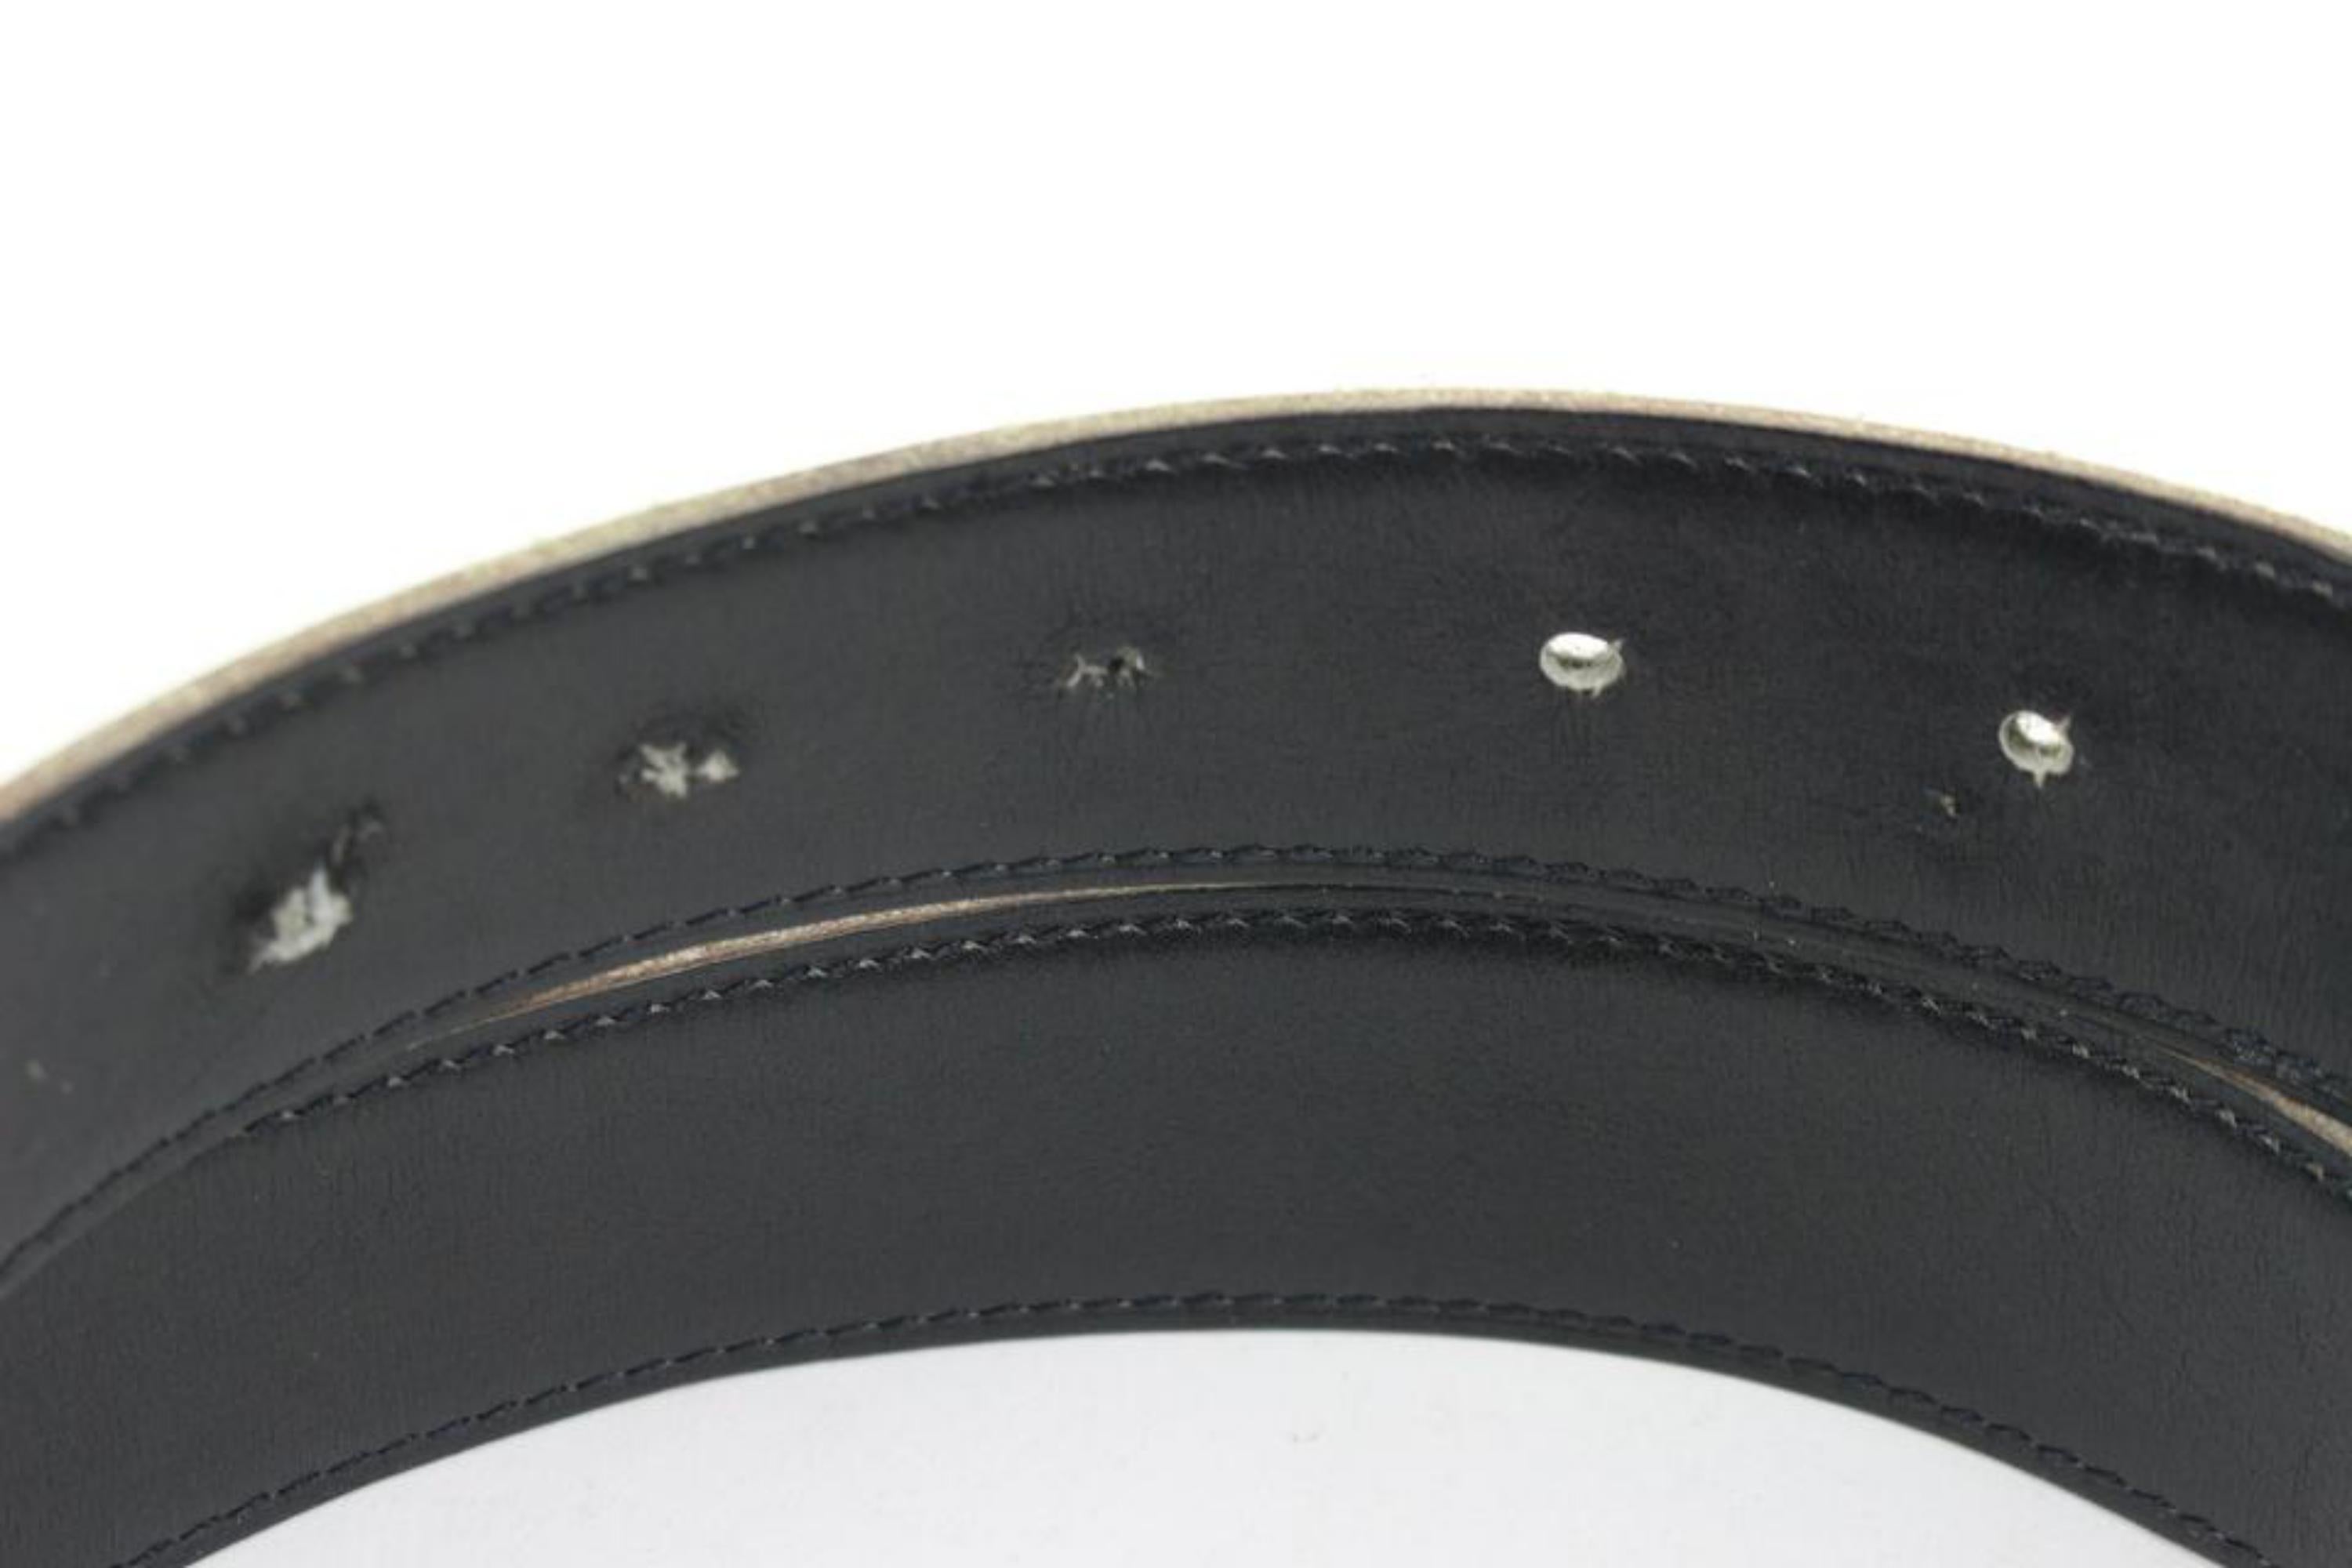 Kit ceinture logo H réversible 32 mm noir x bleu Jean x or 41h55 en vente 4